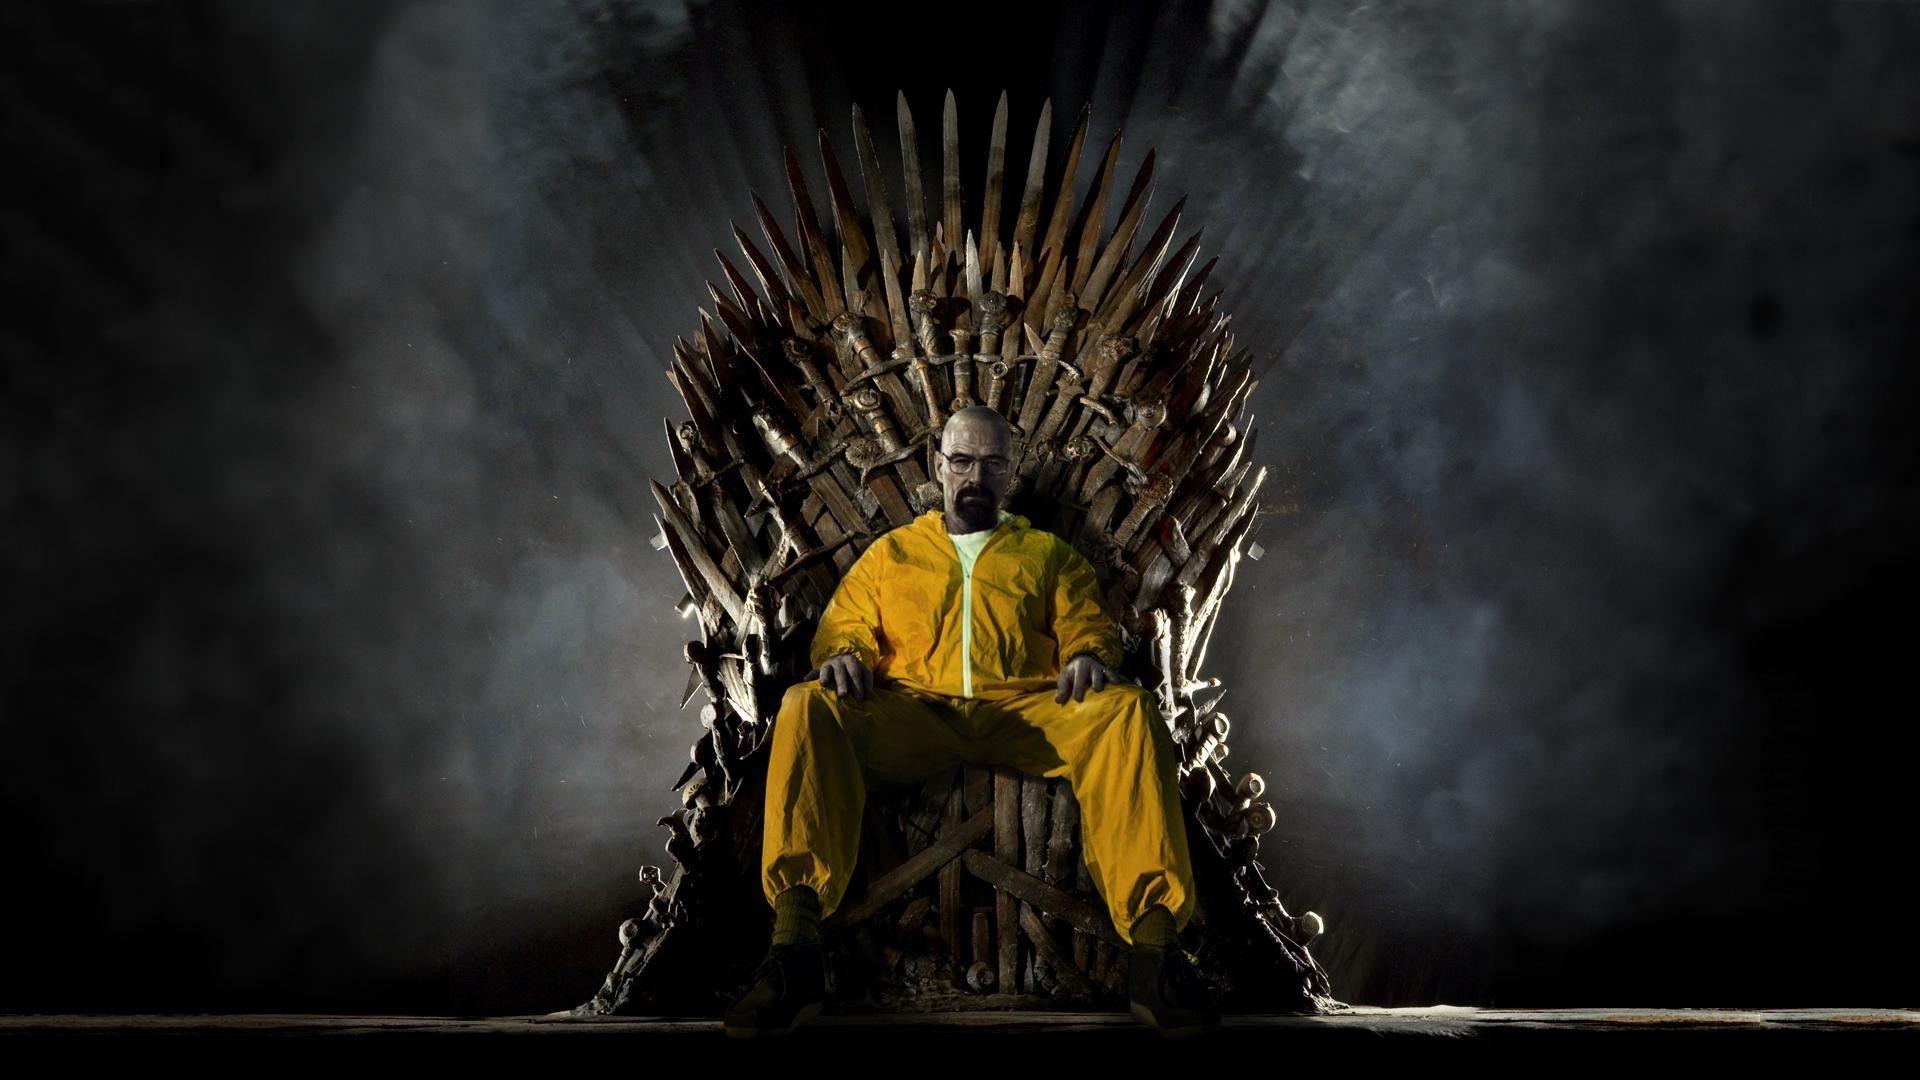 Walter White on the Iron Throne [Breaking Bad Wallpaper]